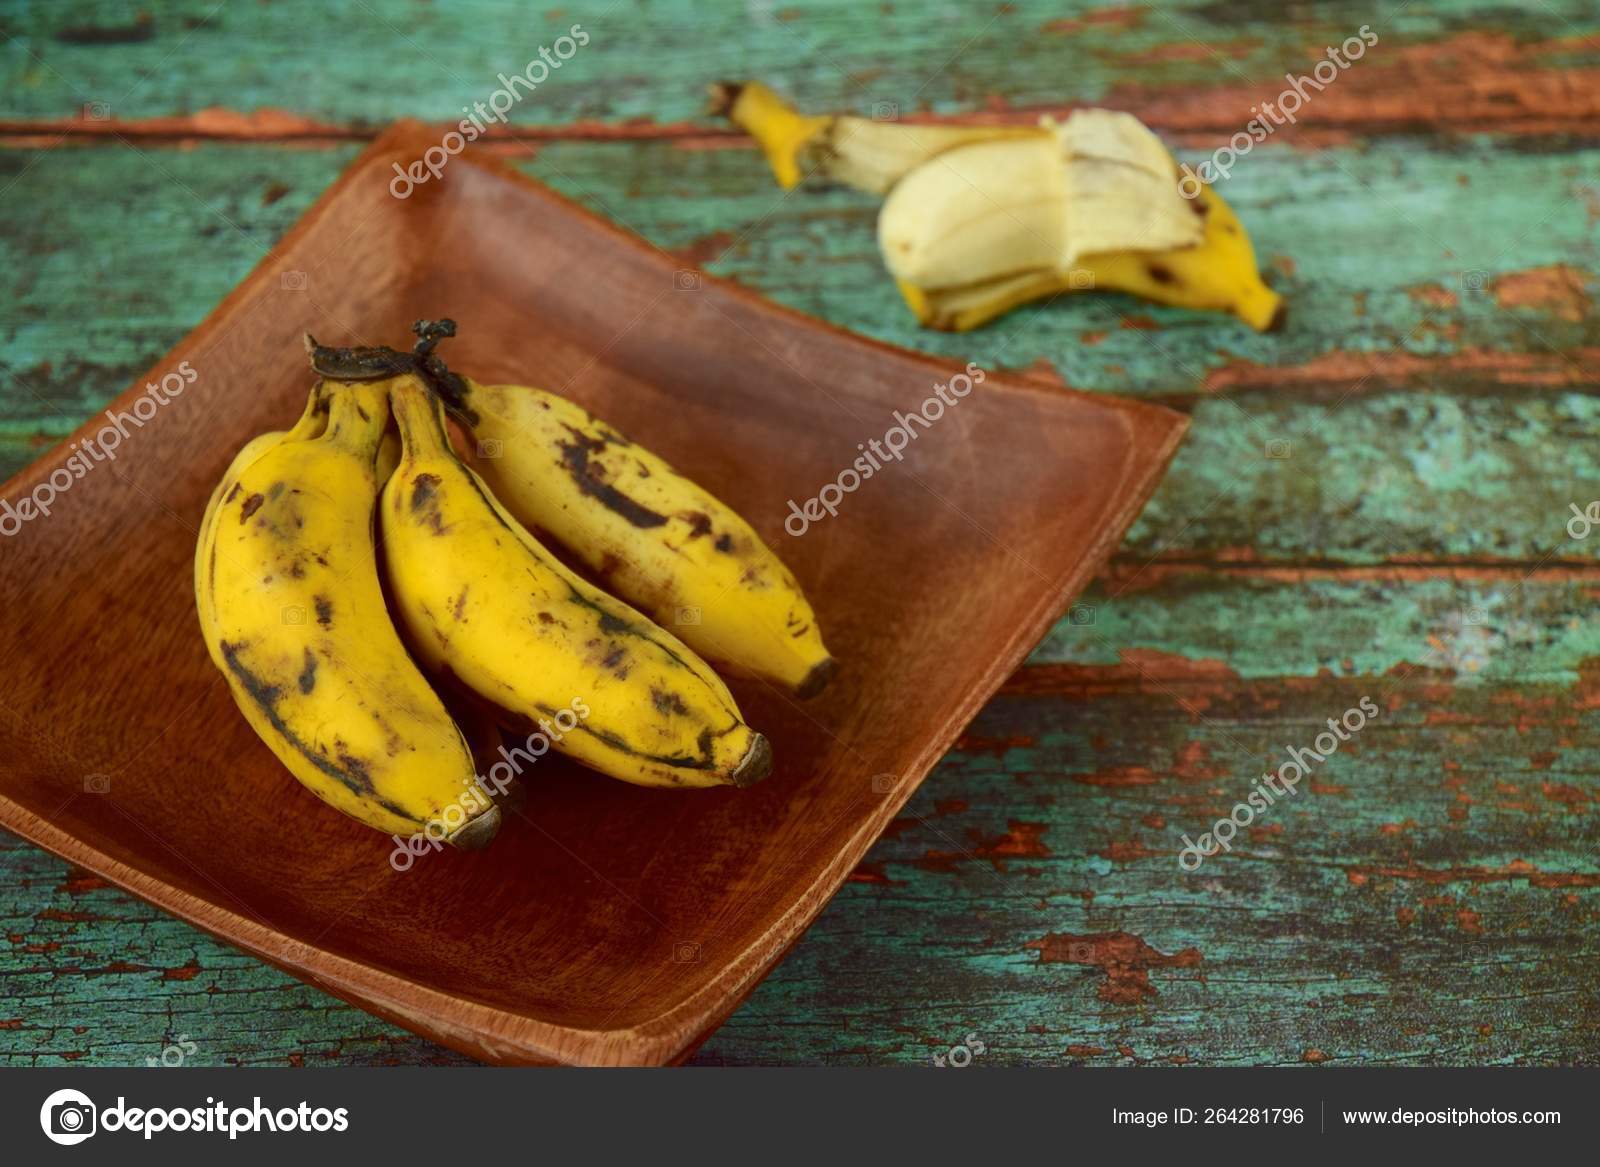 https://st4.depositphotos.com/2673591/26428/i/1600/depositphotos_264281796-stock-photo-fresh-organic-latundan-bananas-tundan.jpg